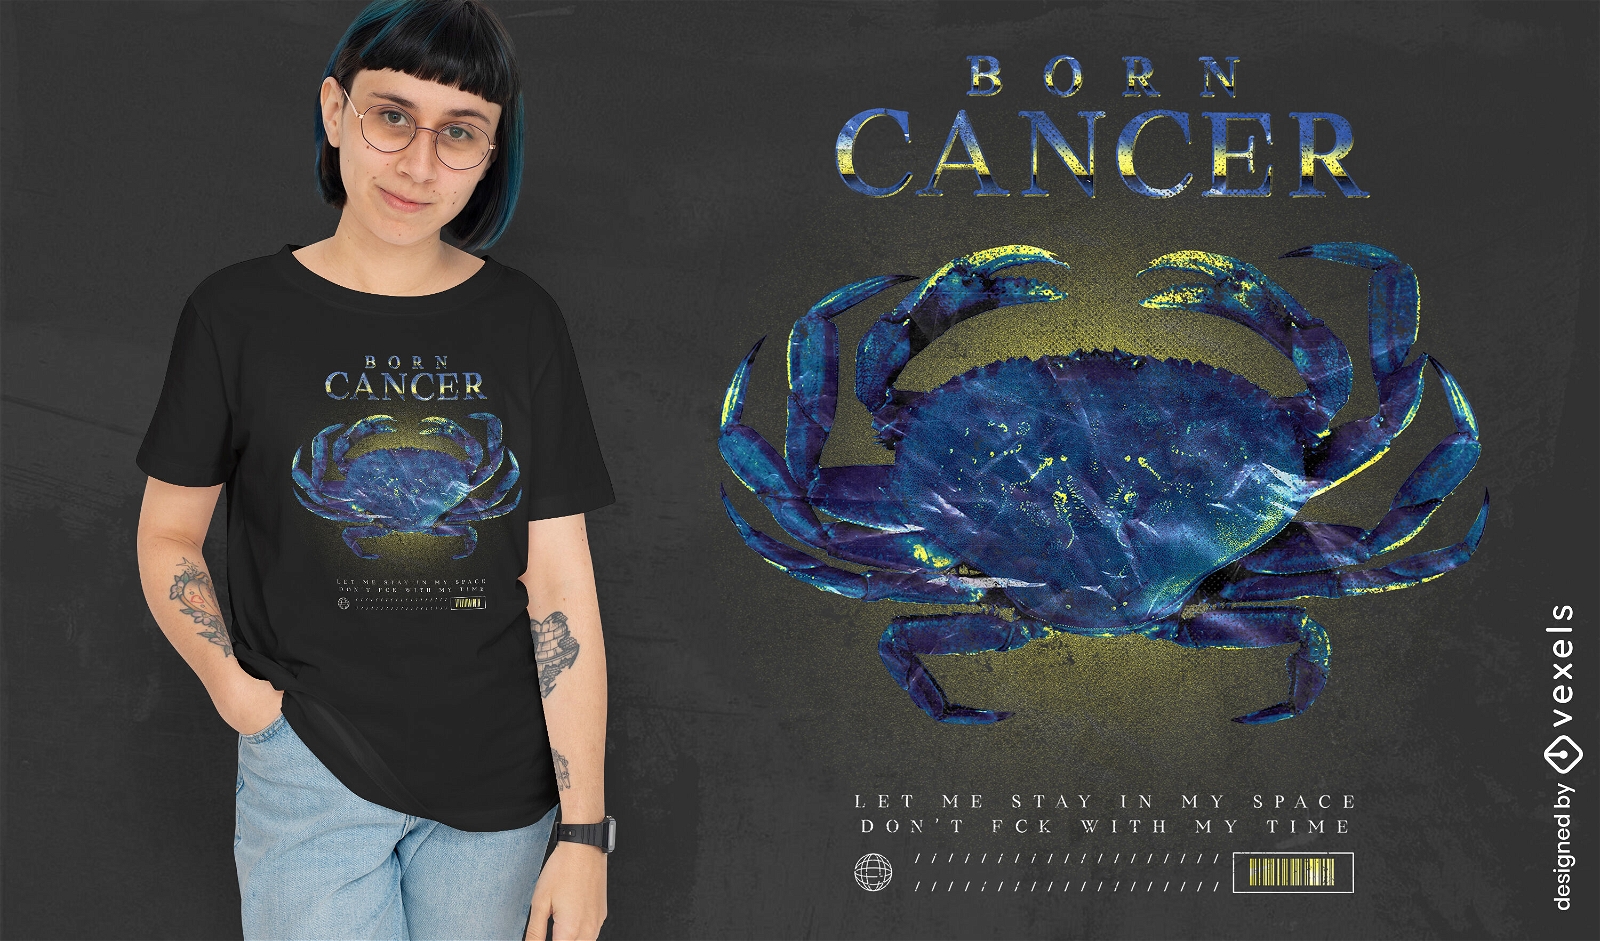 Born cancer t-shirt design